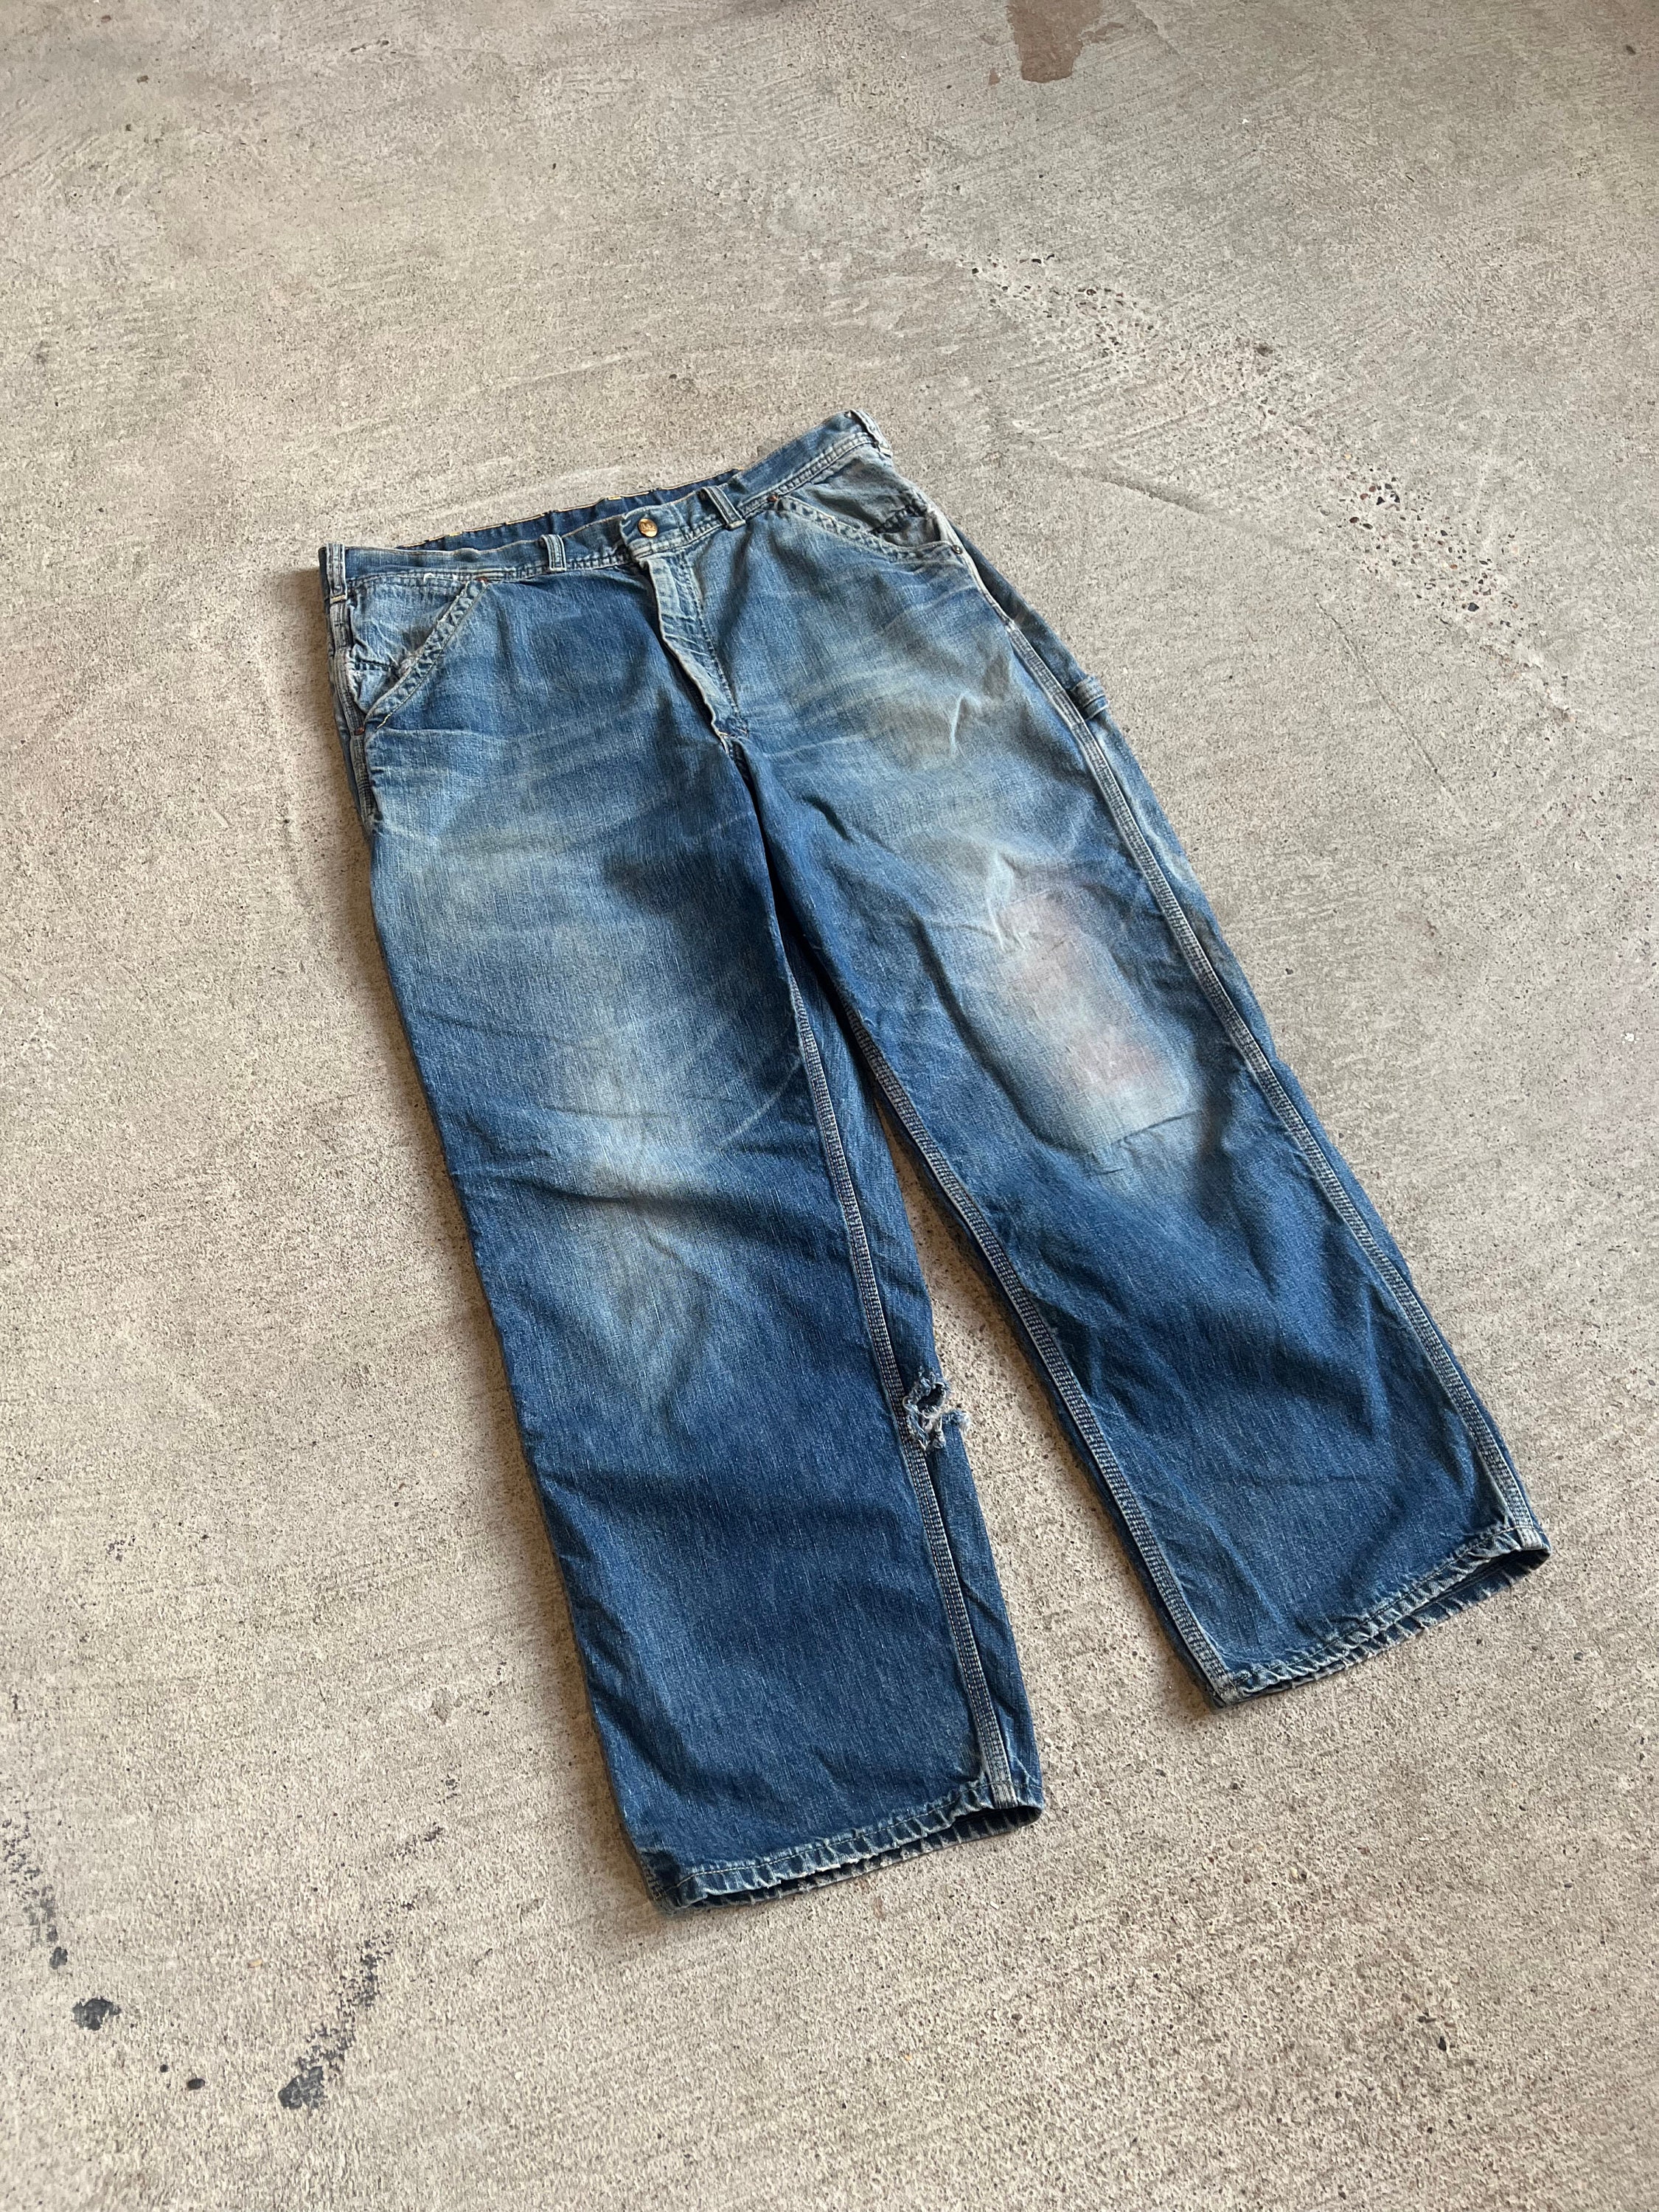 Vintage Lee Pipes High Performance Jeans BMX Khaki Pants Size M 28x25 Wide  Leg  eBay